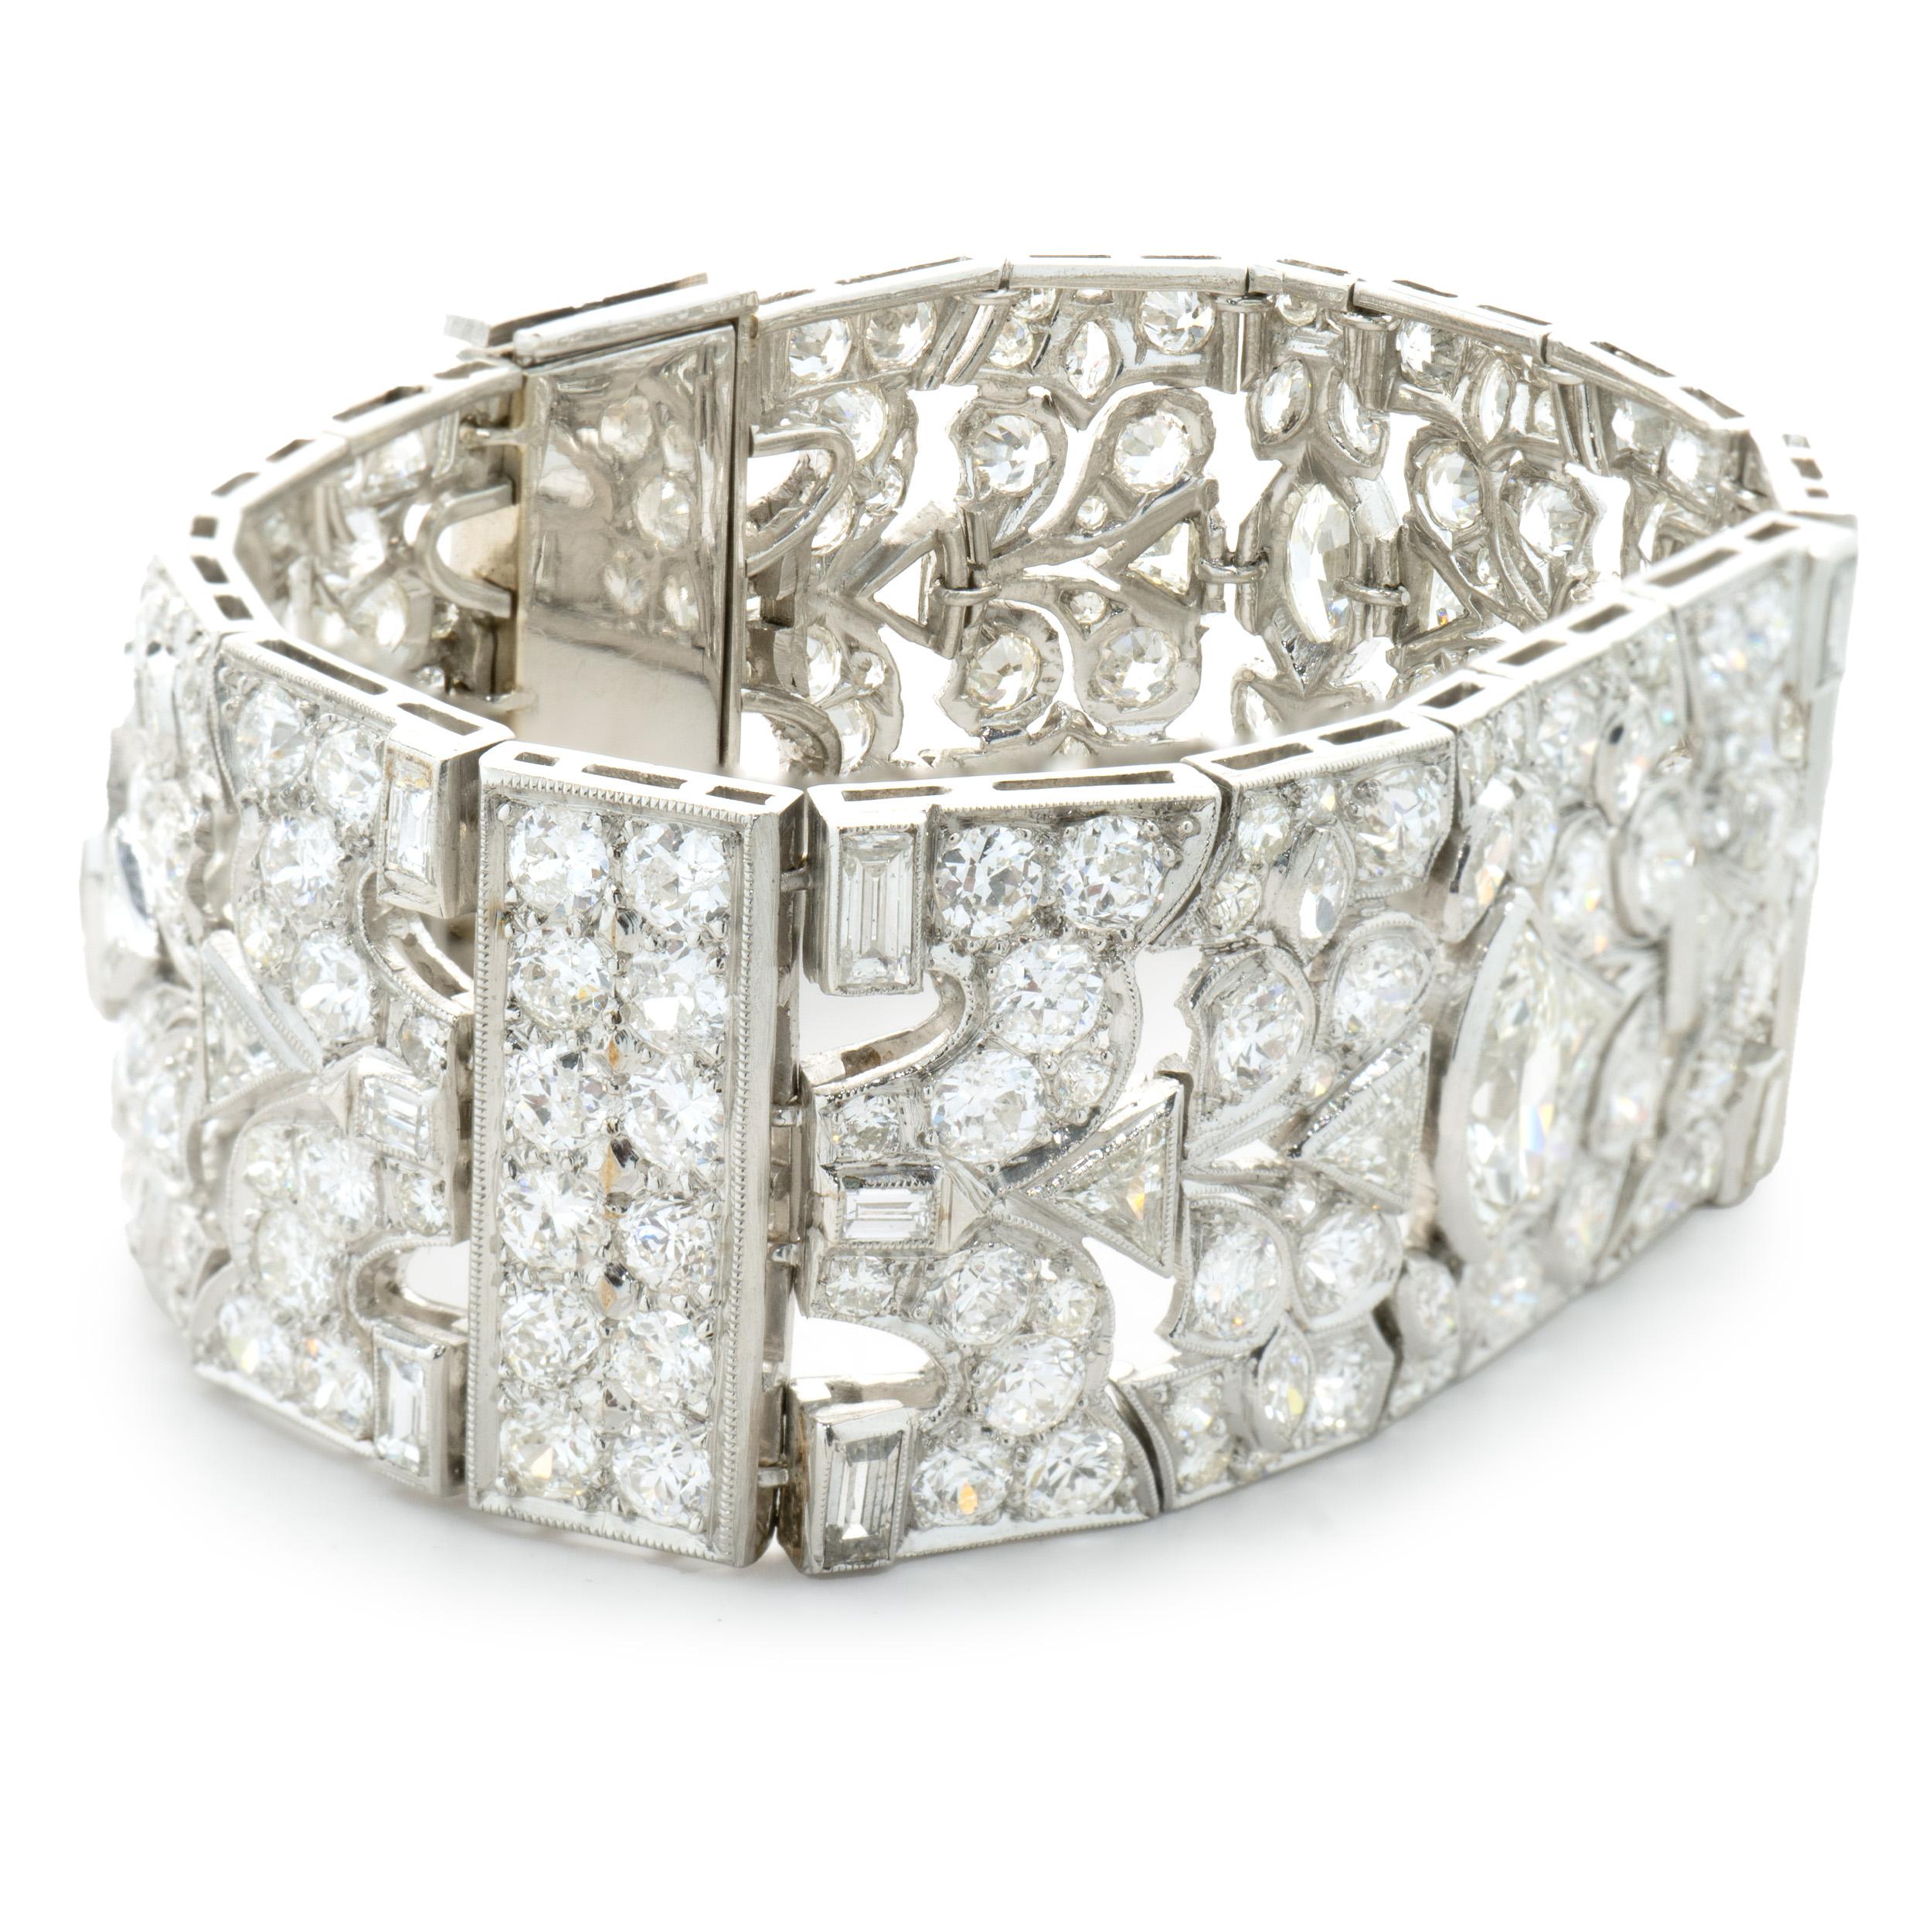 Designer: custom design
Material: Platinum & 14K white gold
Diamond: 2 marquise cut = 0.90cttw
Color: J
Clarity: VS2
Diamond: 375 round, baguette, marquise & trillion cut = 18.00cttw
Color: H / I / J
Clarity: SI1-2
Dimensions: bracelet will fit up